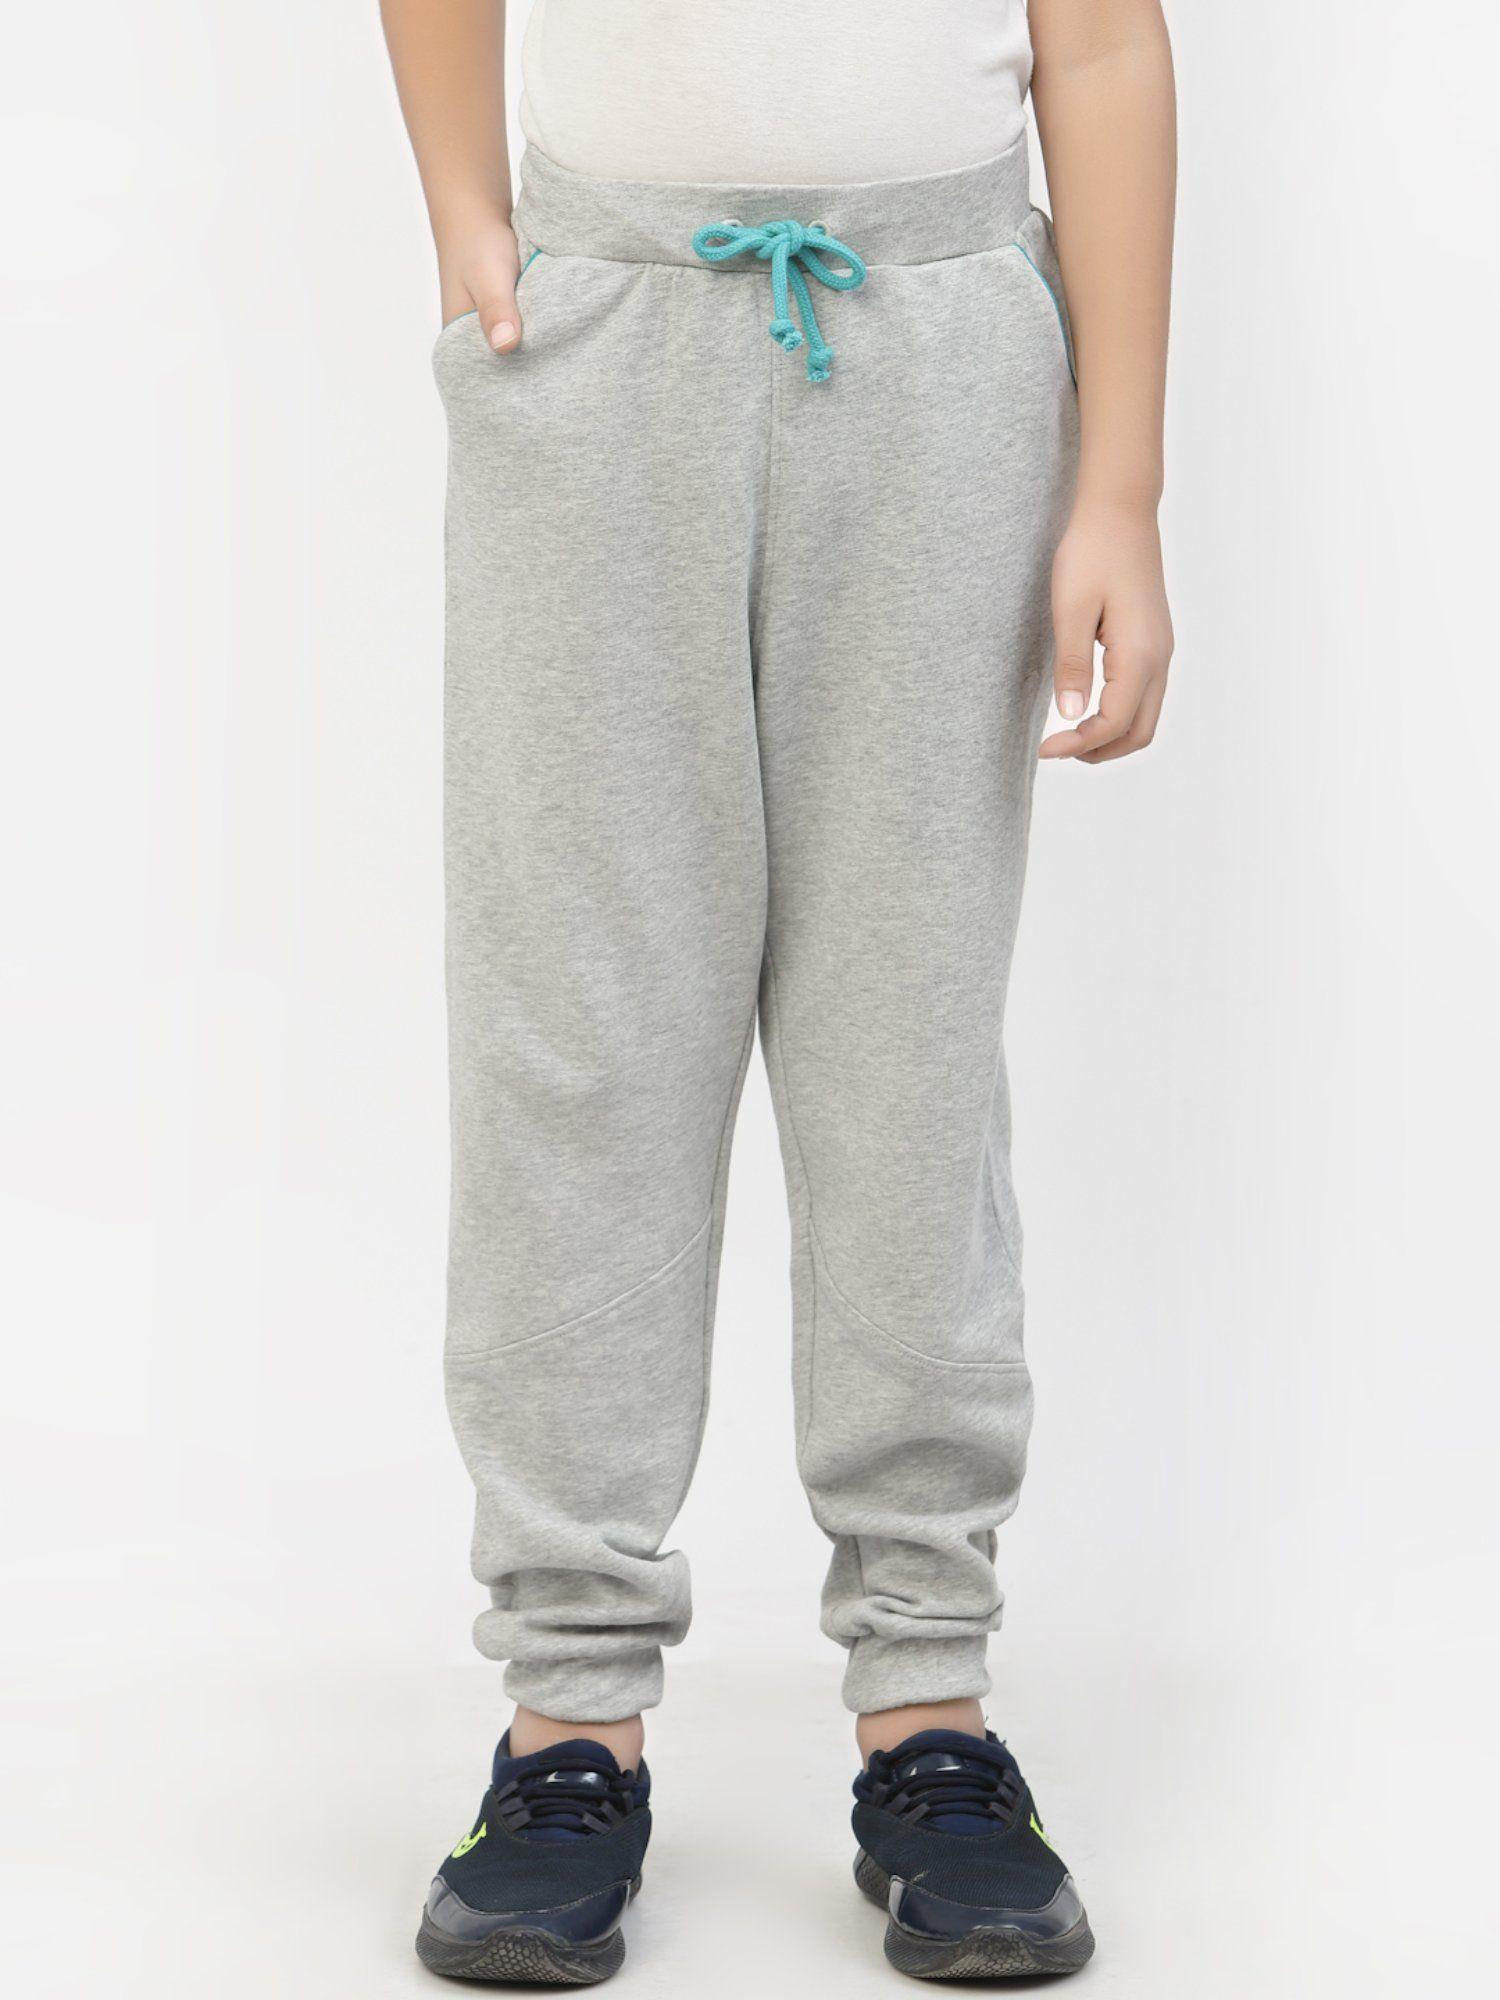 stylish grey organic cotton casual joggers for boys